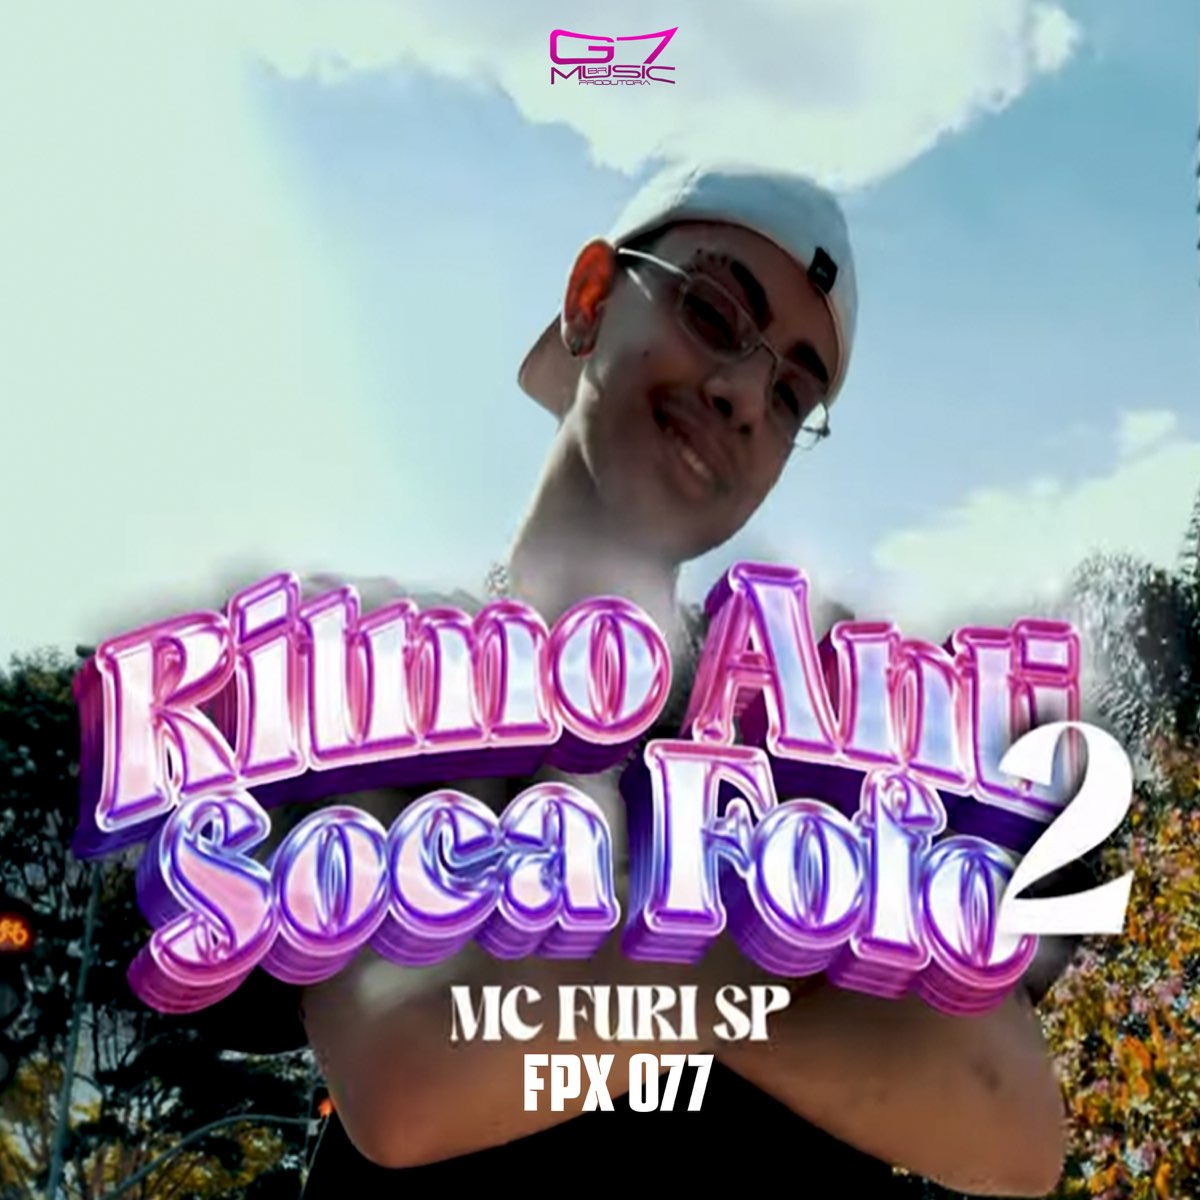 Stream Ritmo Anti Soca Fofo 2 by sophiaaa